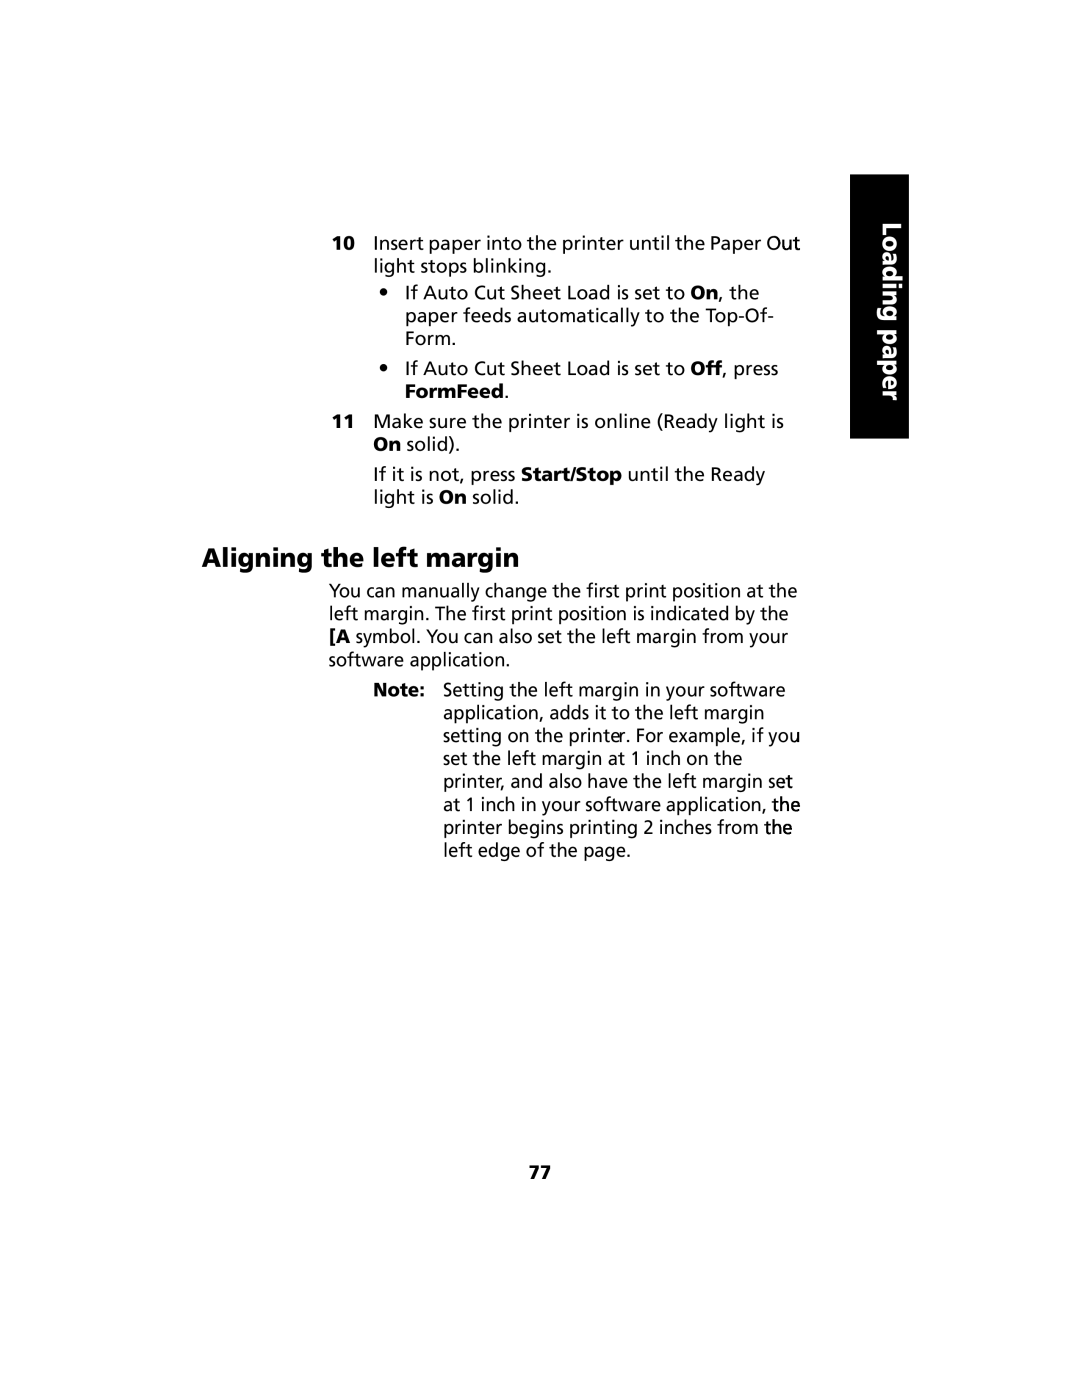 Lexmark 2480 manual Aligning the left margin, Loading paper 